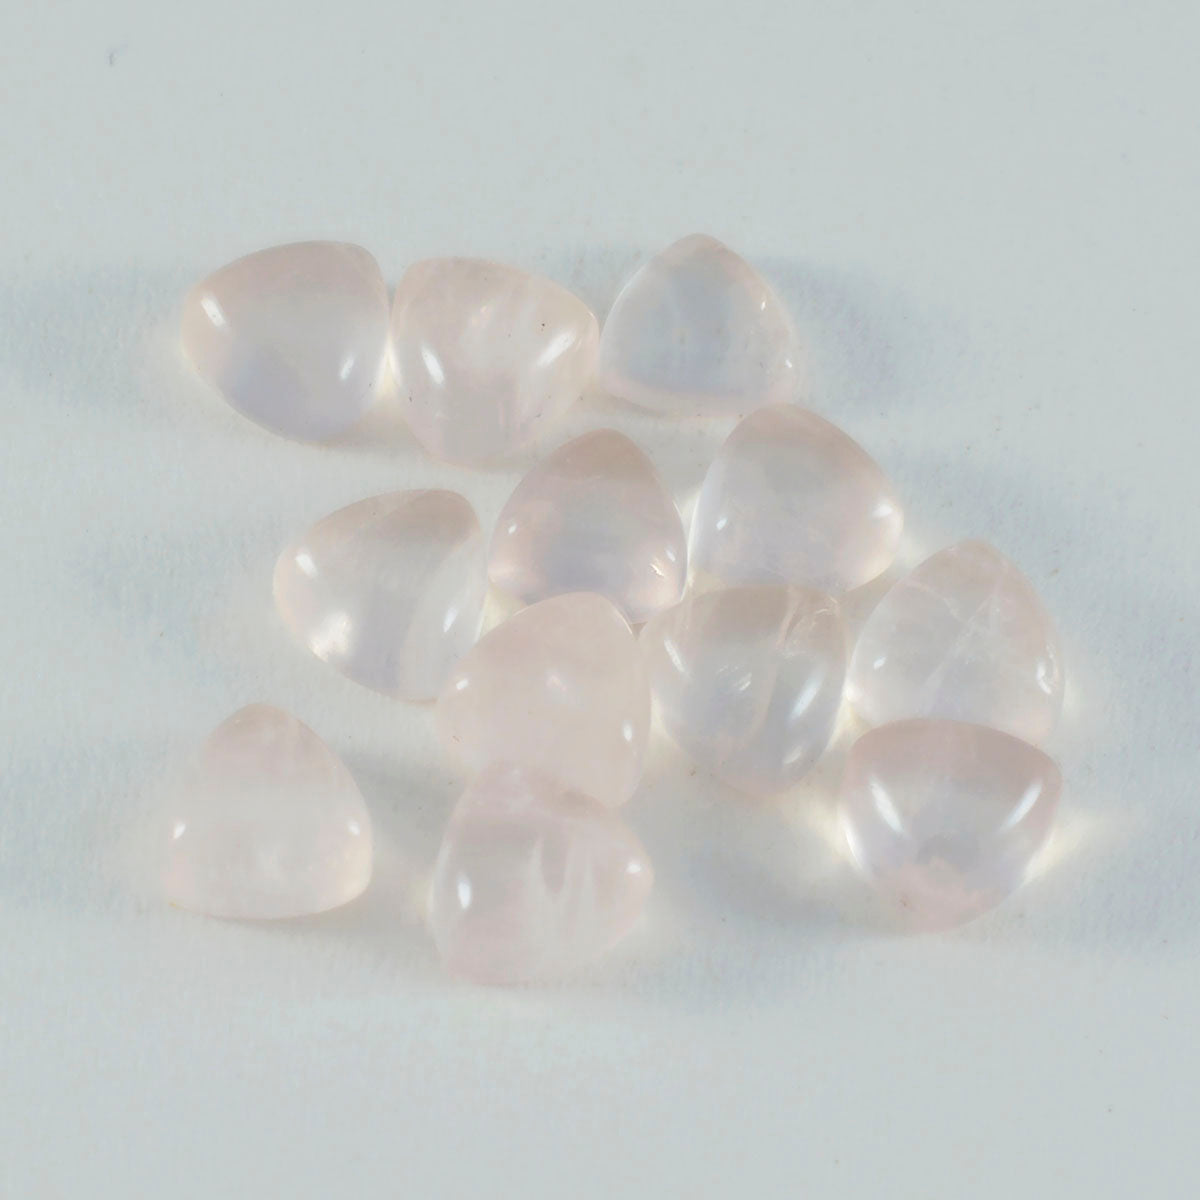 Riyogems 1PC Pink Rose Quartz Cabochon 14x14 mm Trillion Shape beautiful Quality Loose Gems